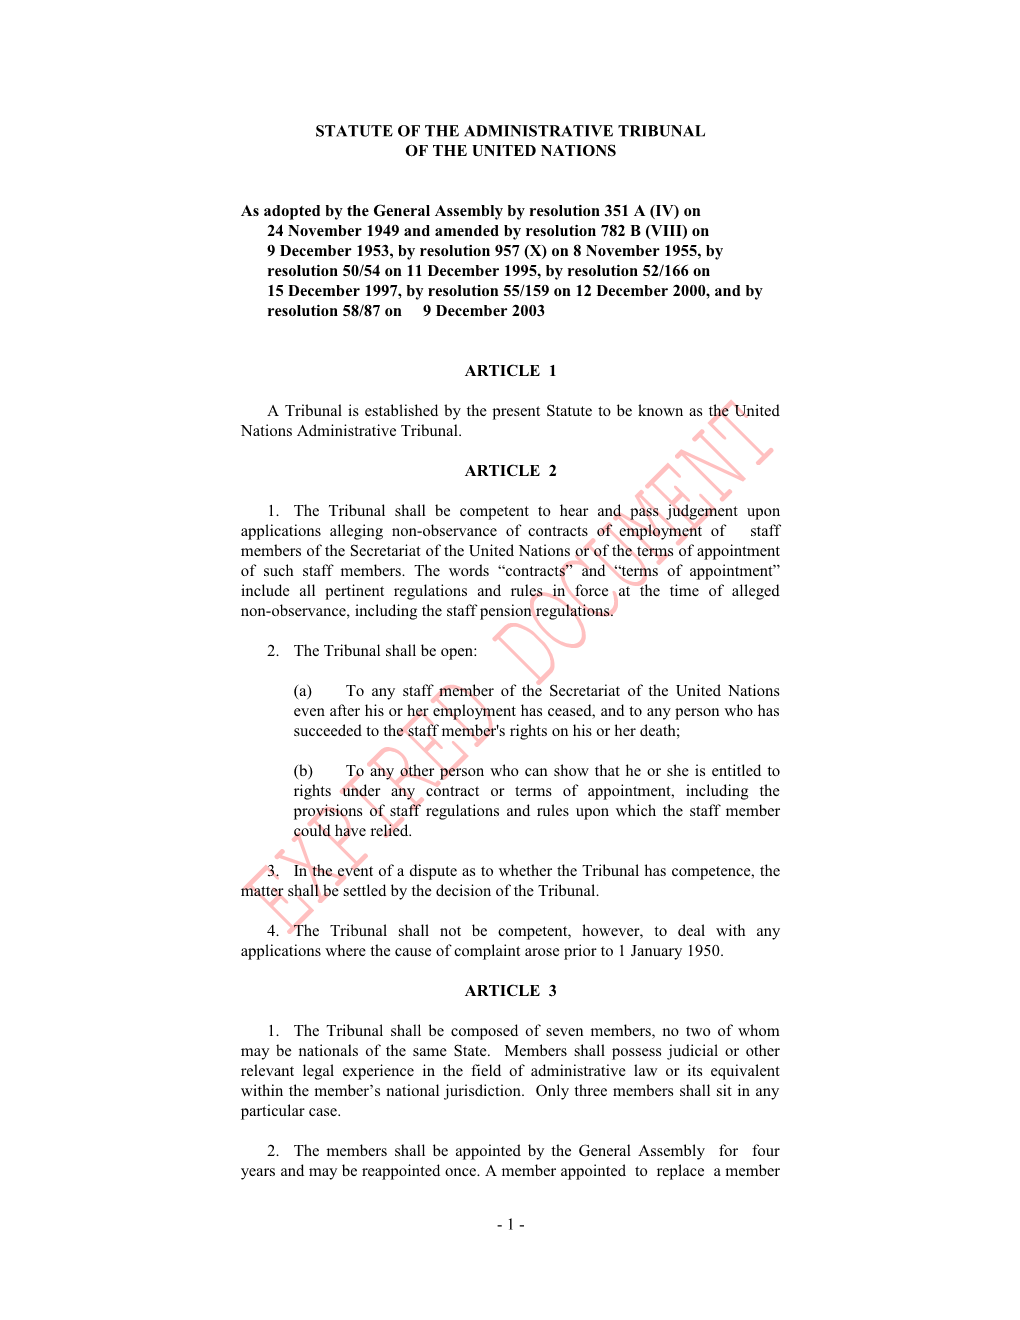 Statute of the Administrative Tribunal